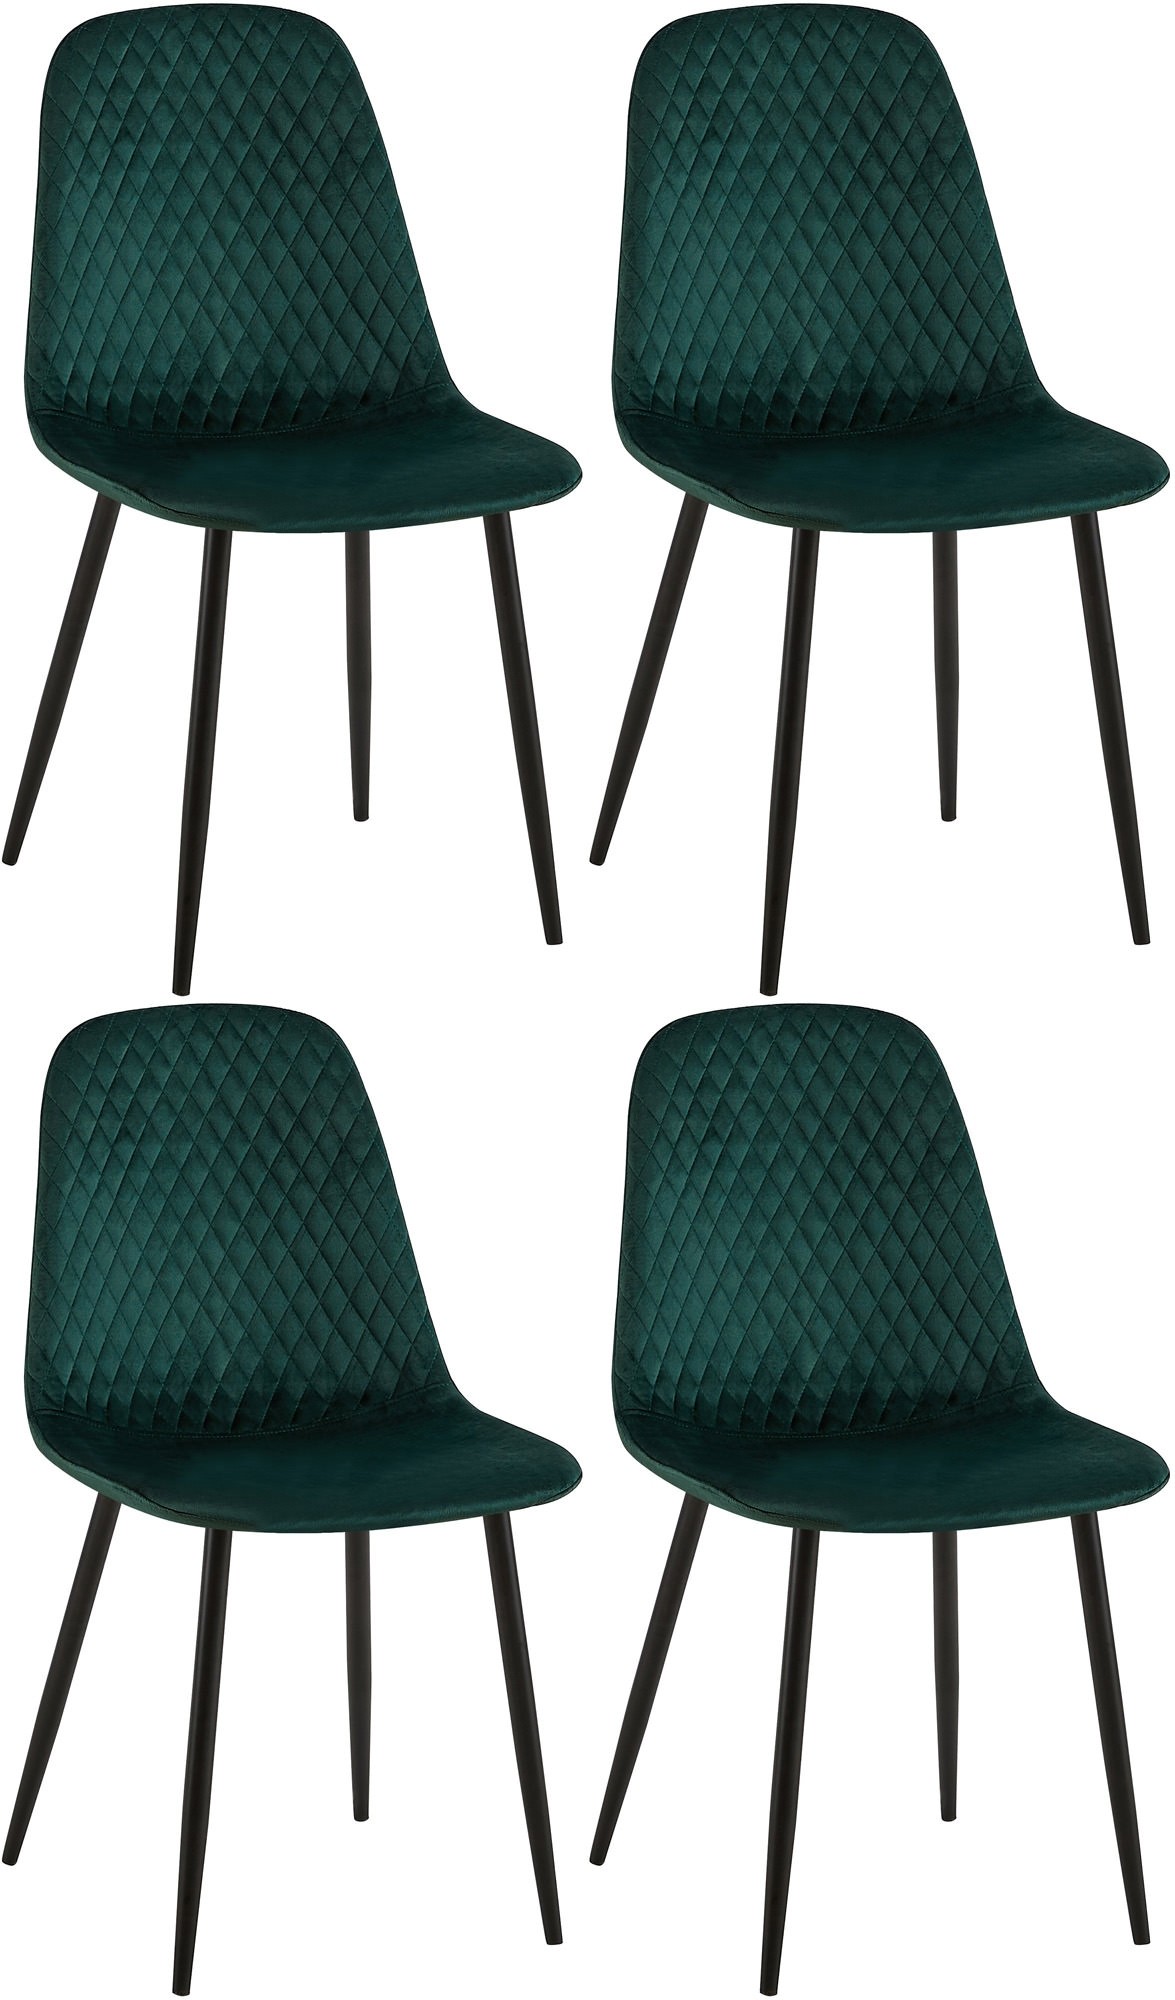 Set de 4 sillas de comedor Giverny en tela o terciopelo